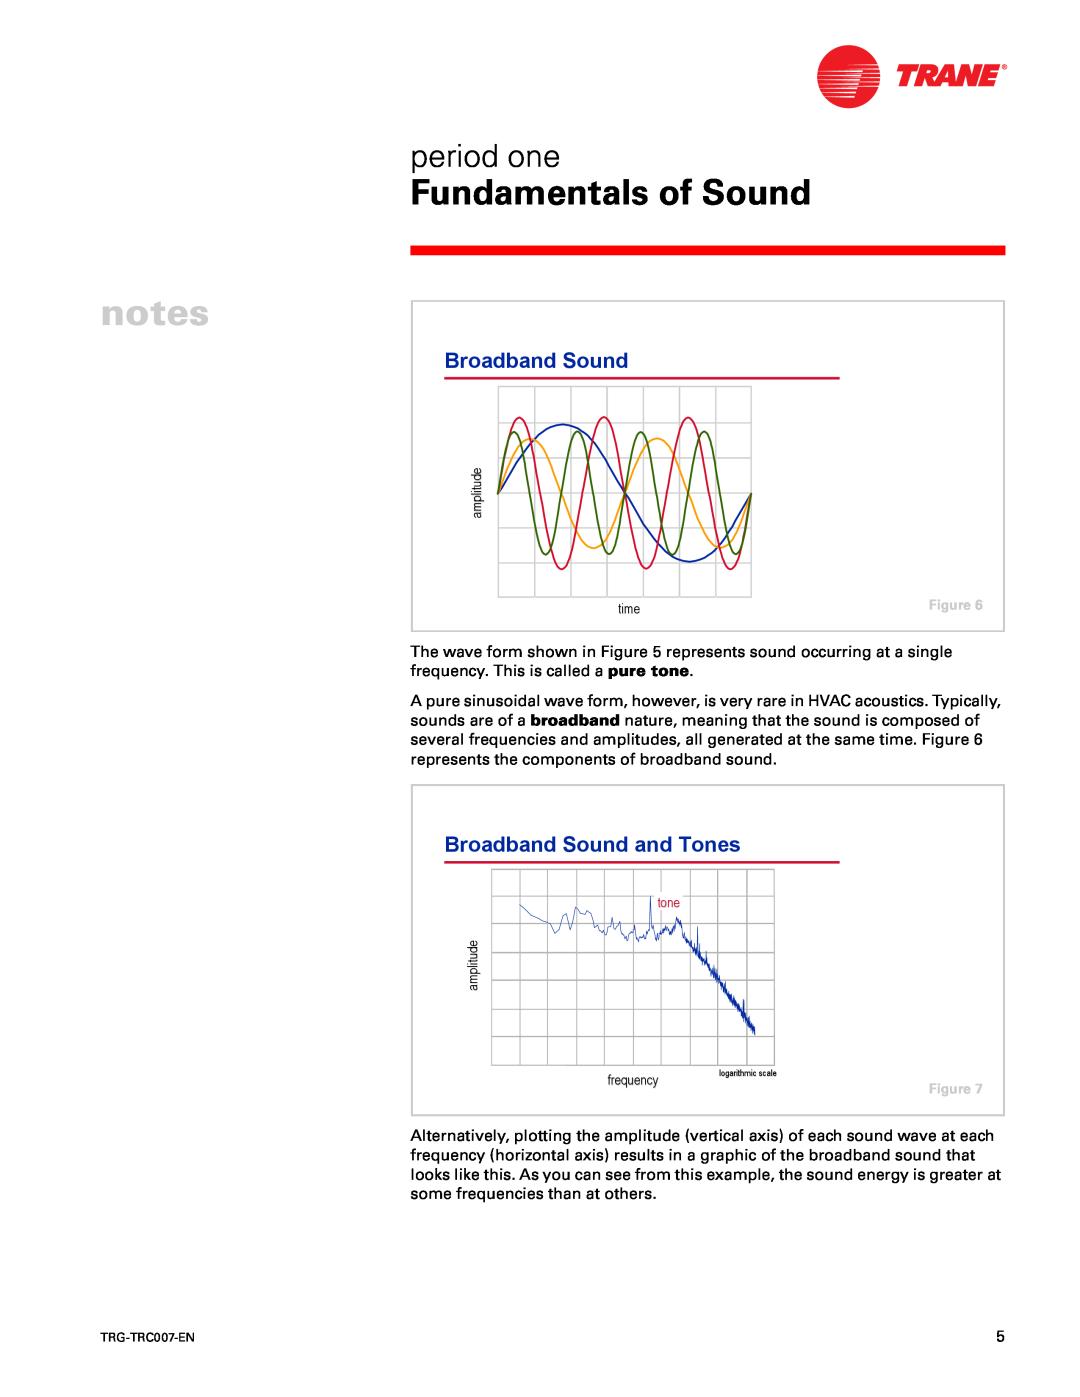 Trane TRG-TRC007-EN manual Broadband Sound and Tones, Fundamentals of Sound, period one 